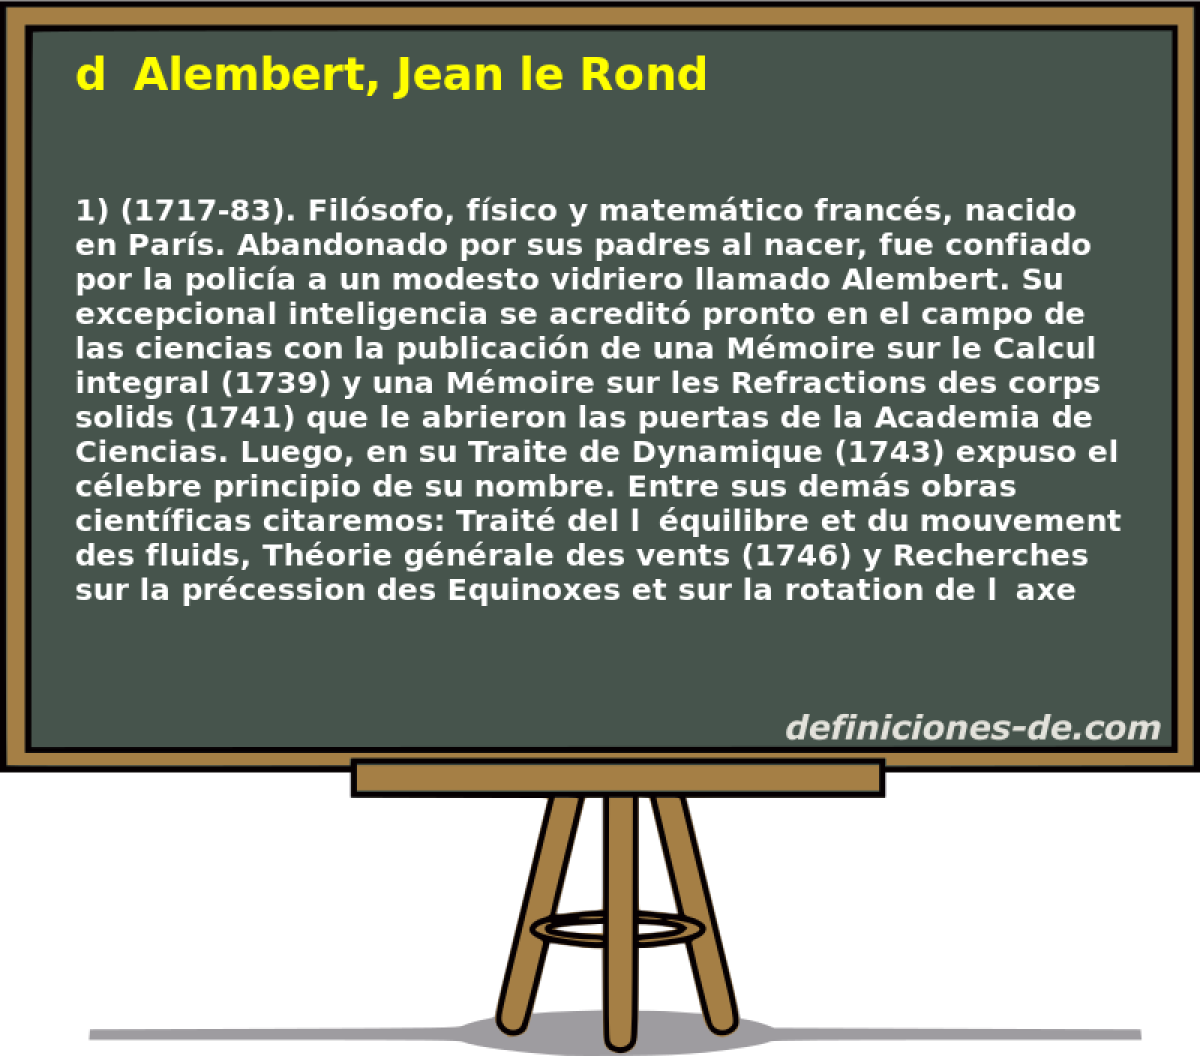 dAlembert, Jean le Rond 